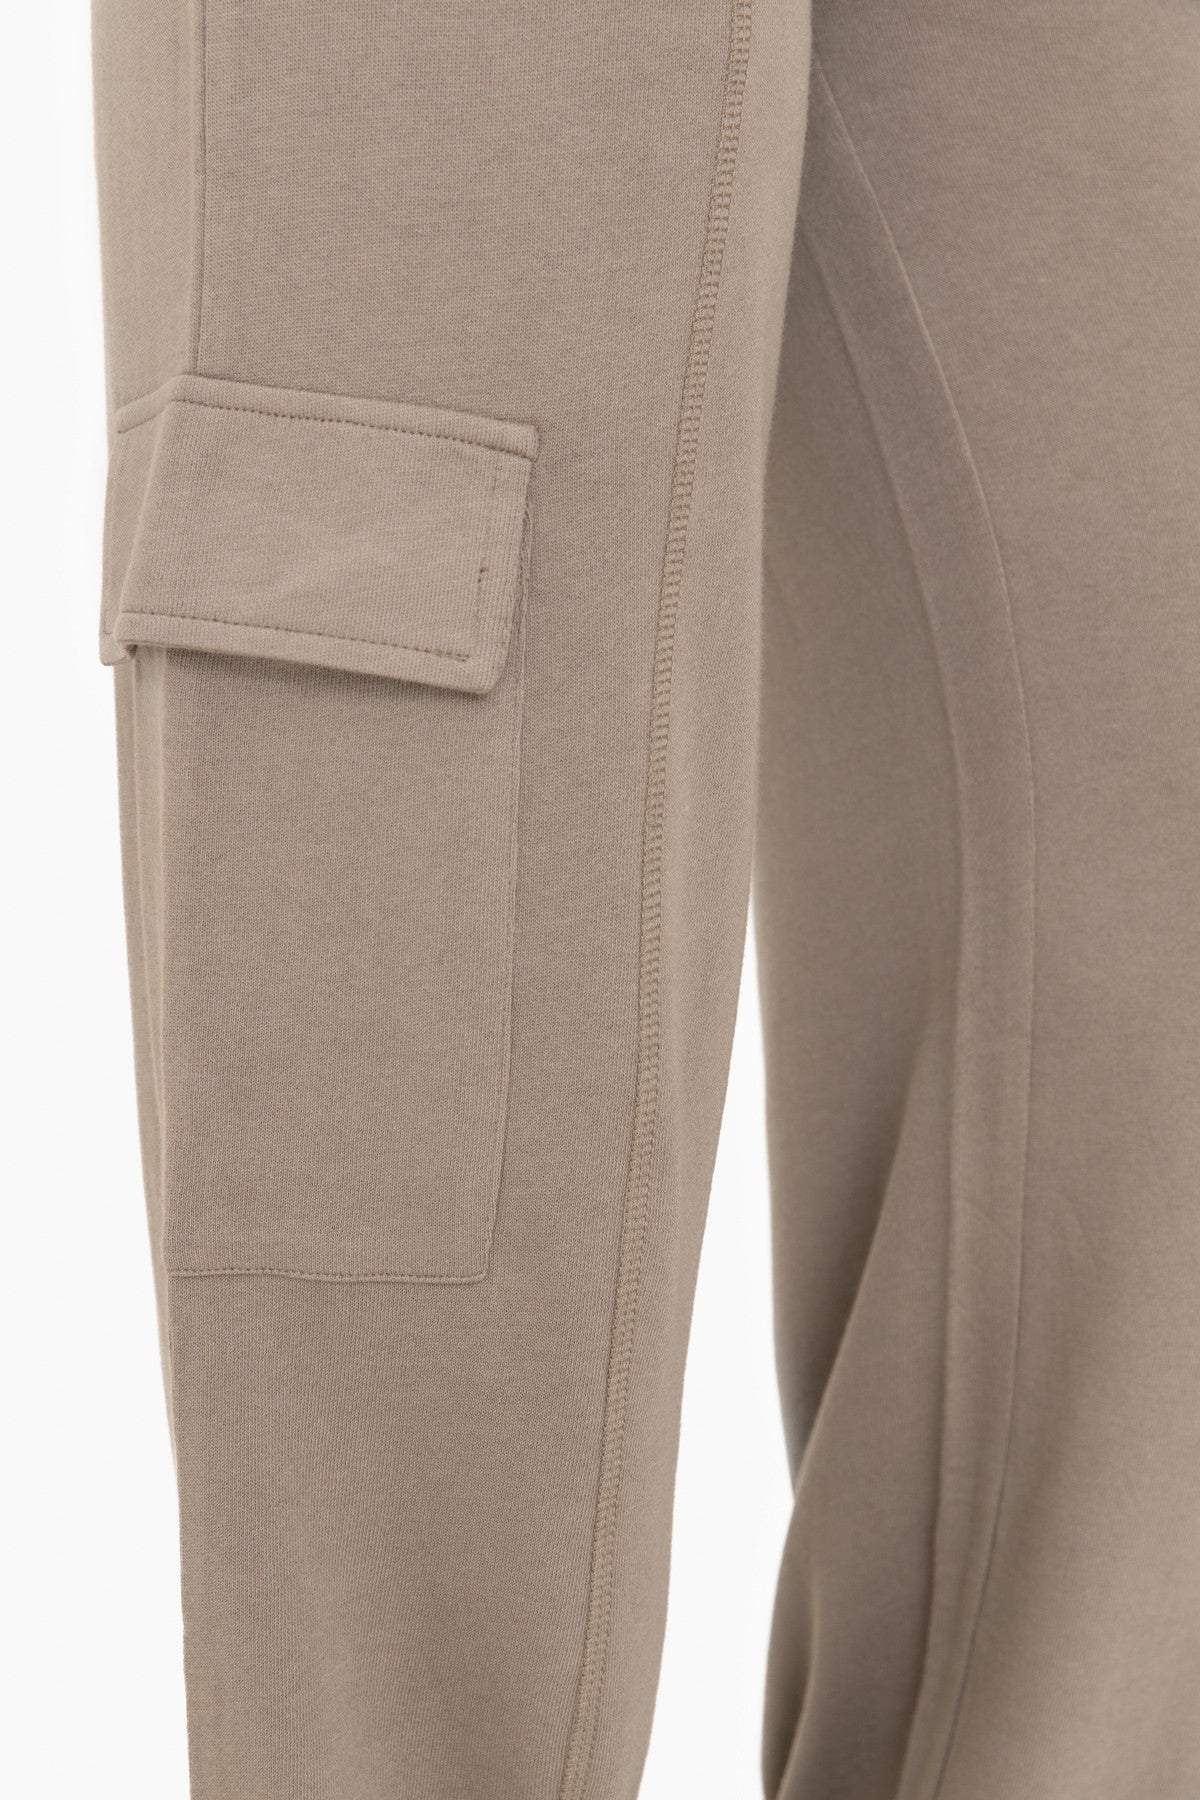 Wide Leg Cargo Pants in Olive/Khaki